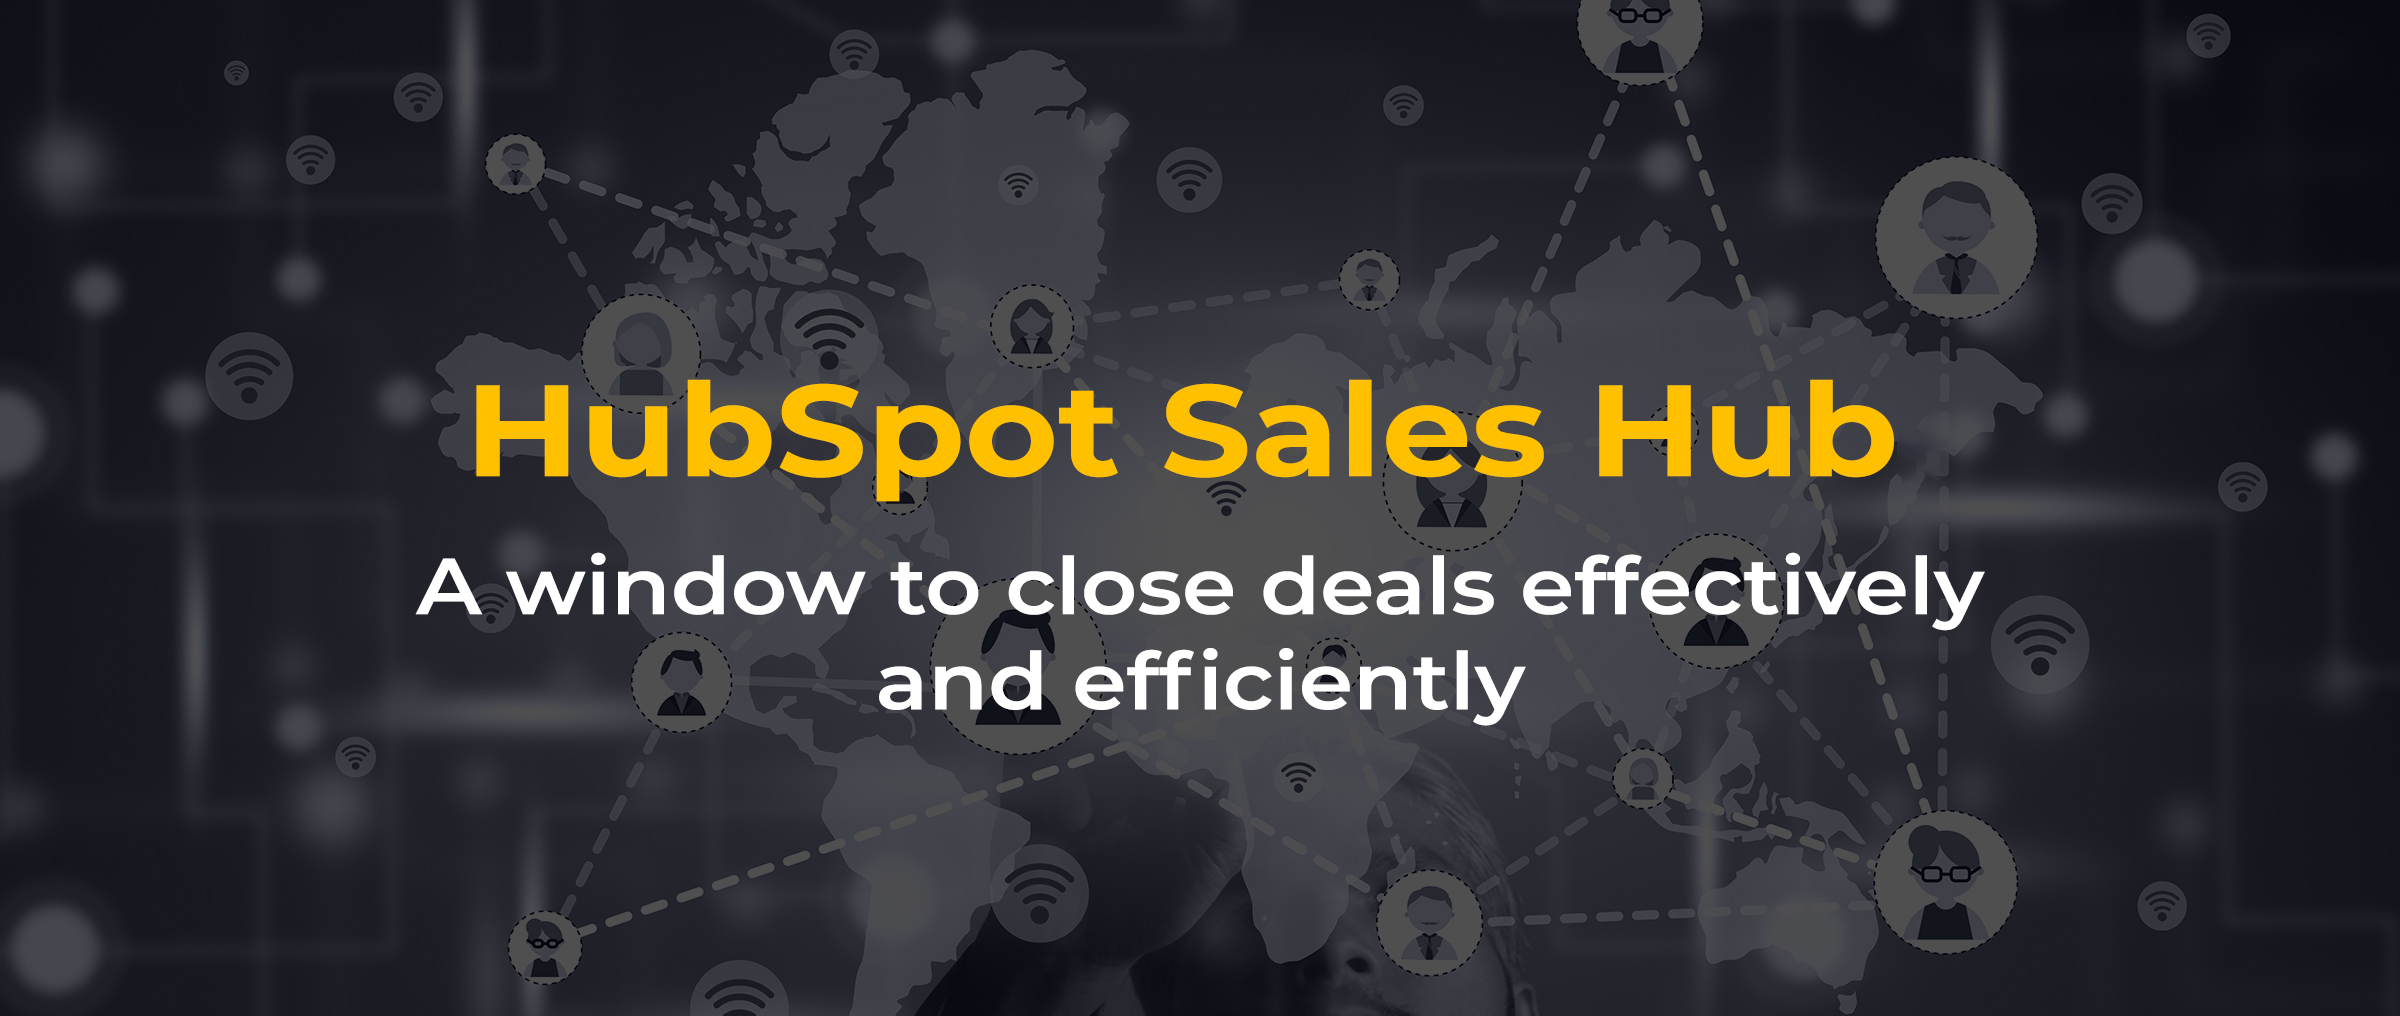 hubSpot-sales-hub_blog